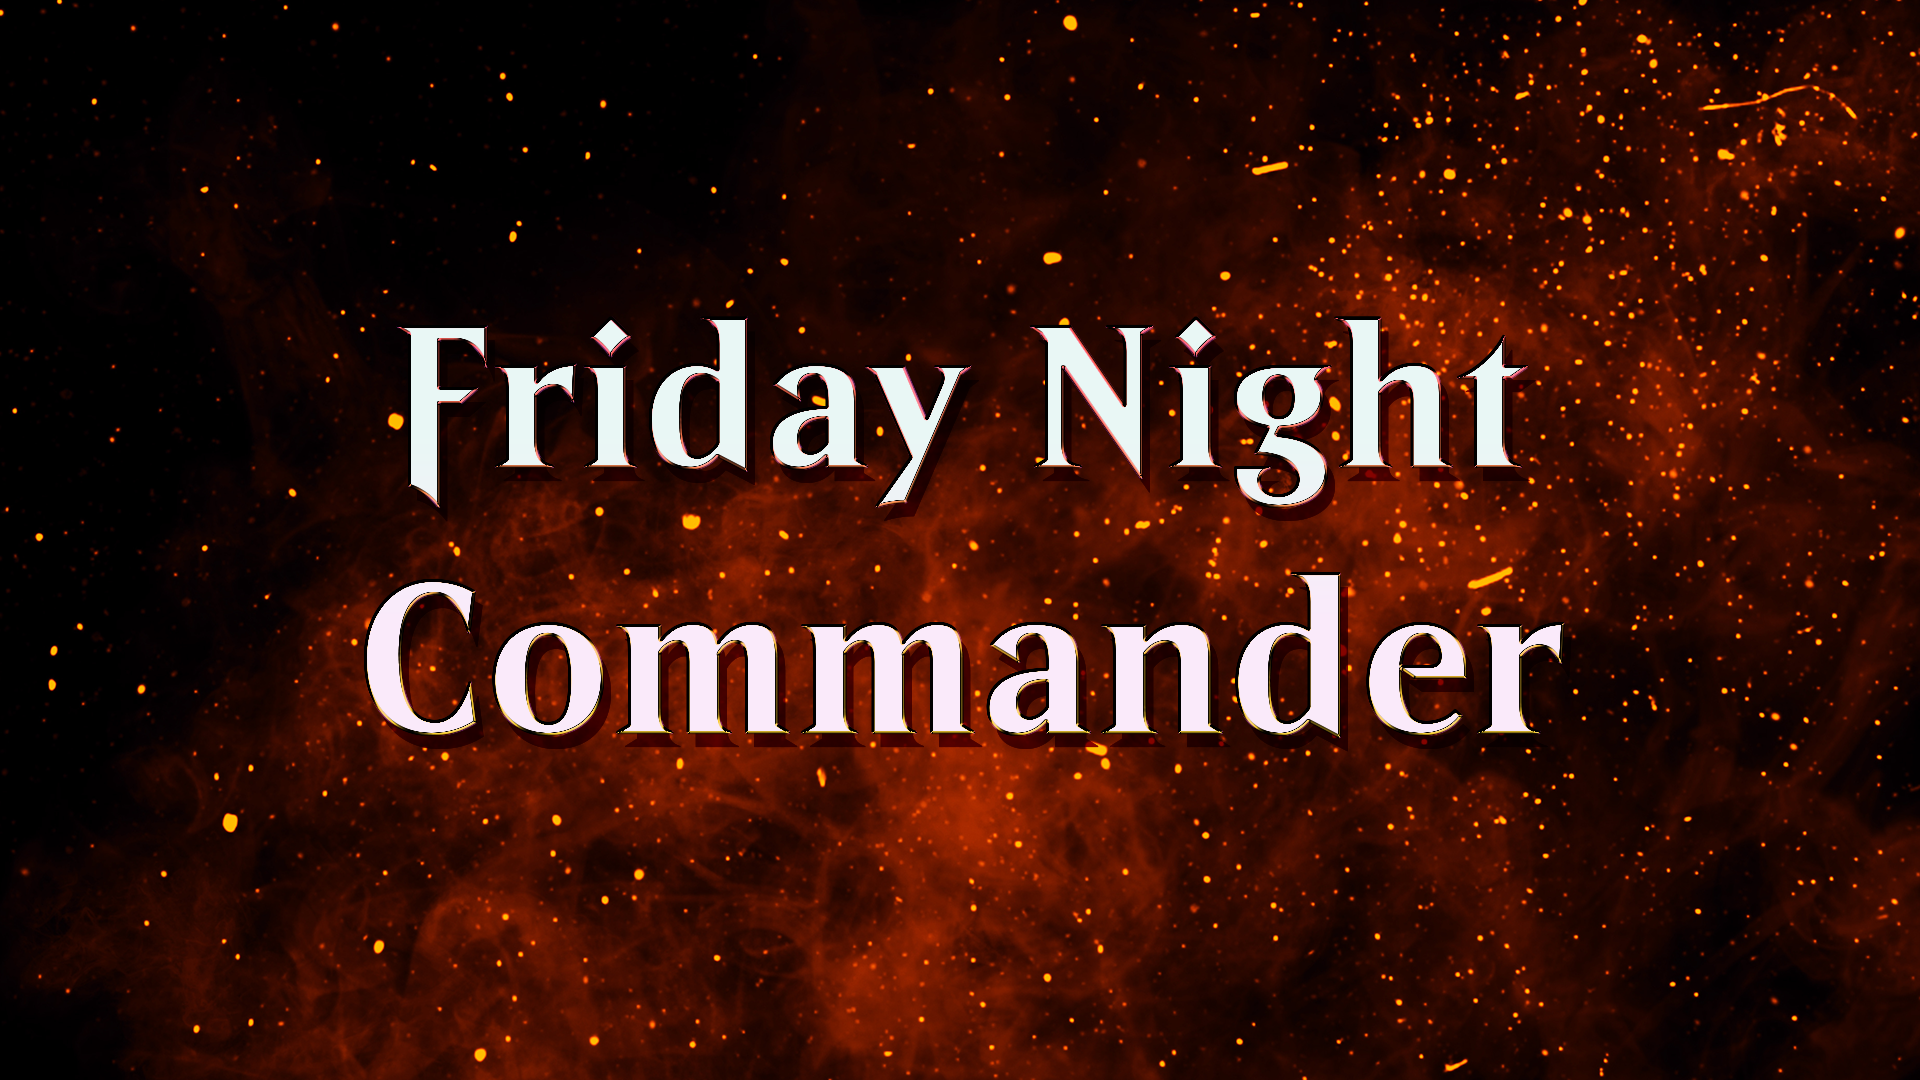 Friday Night Magic: Commander